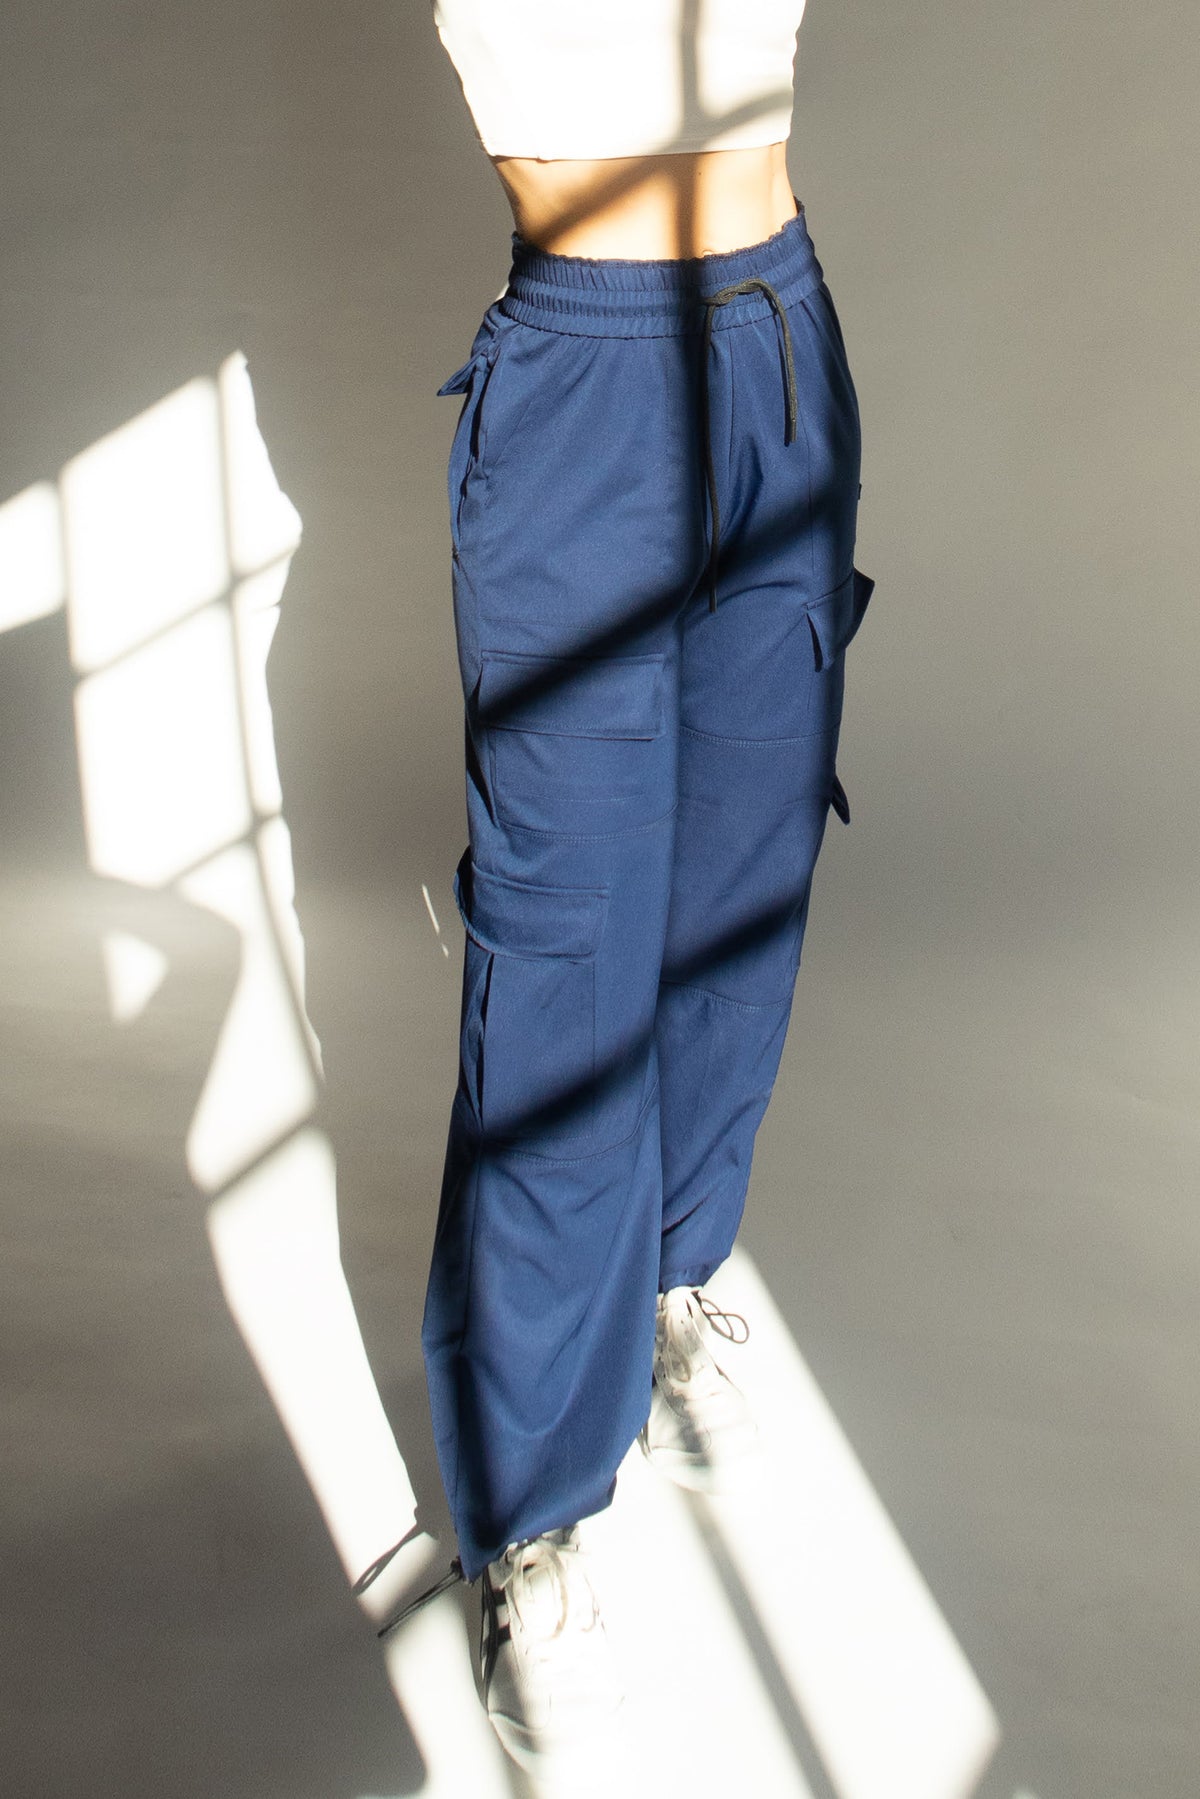 Women's Navy Blue Cargo Pants for Dance